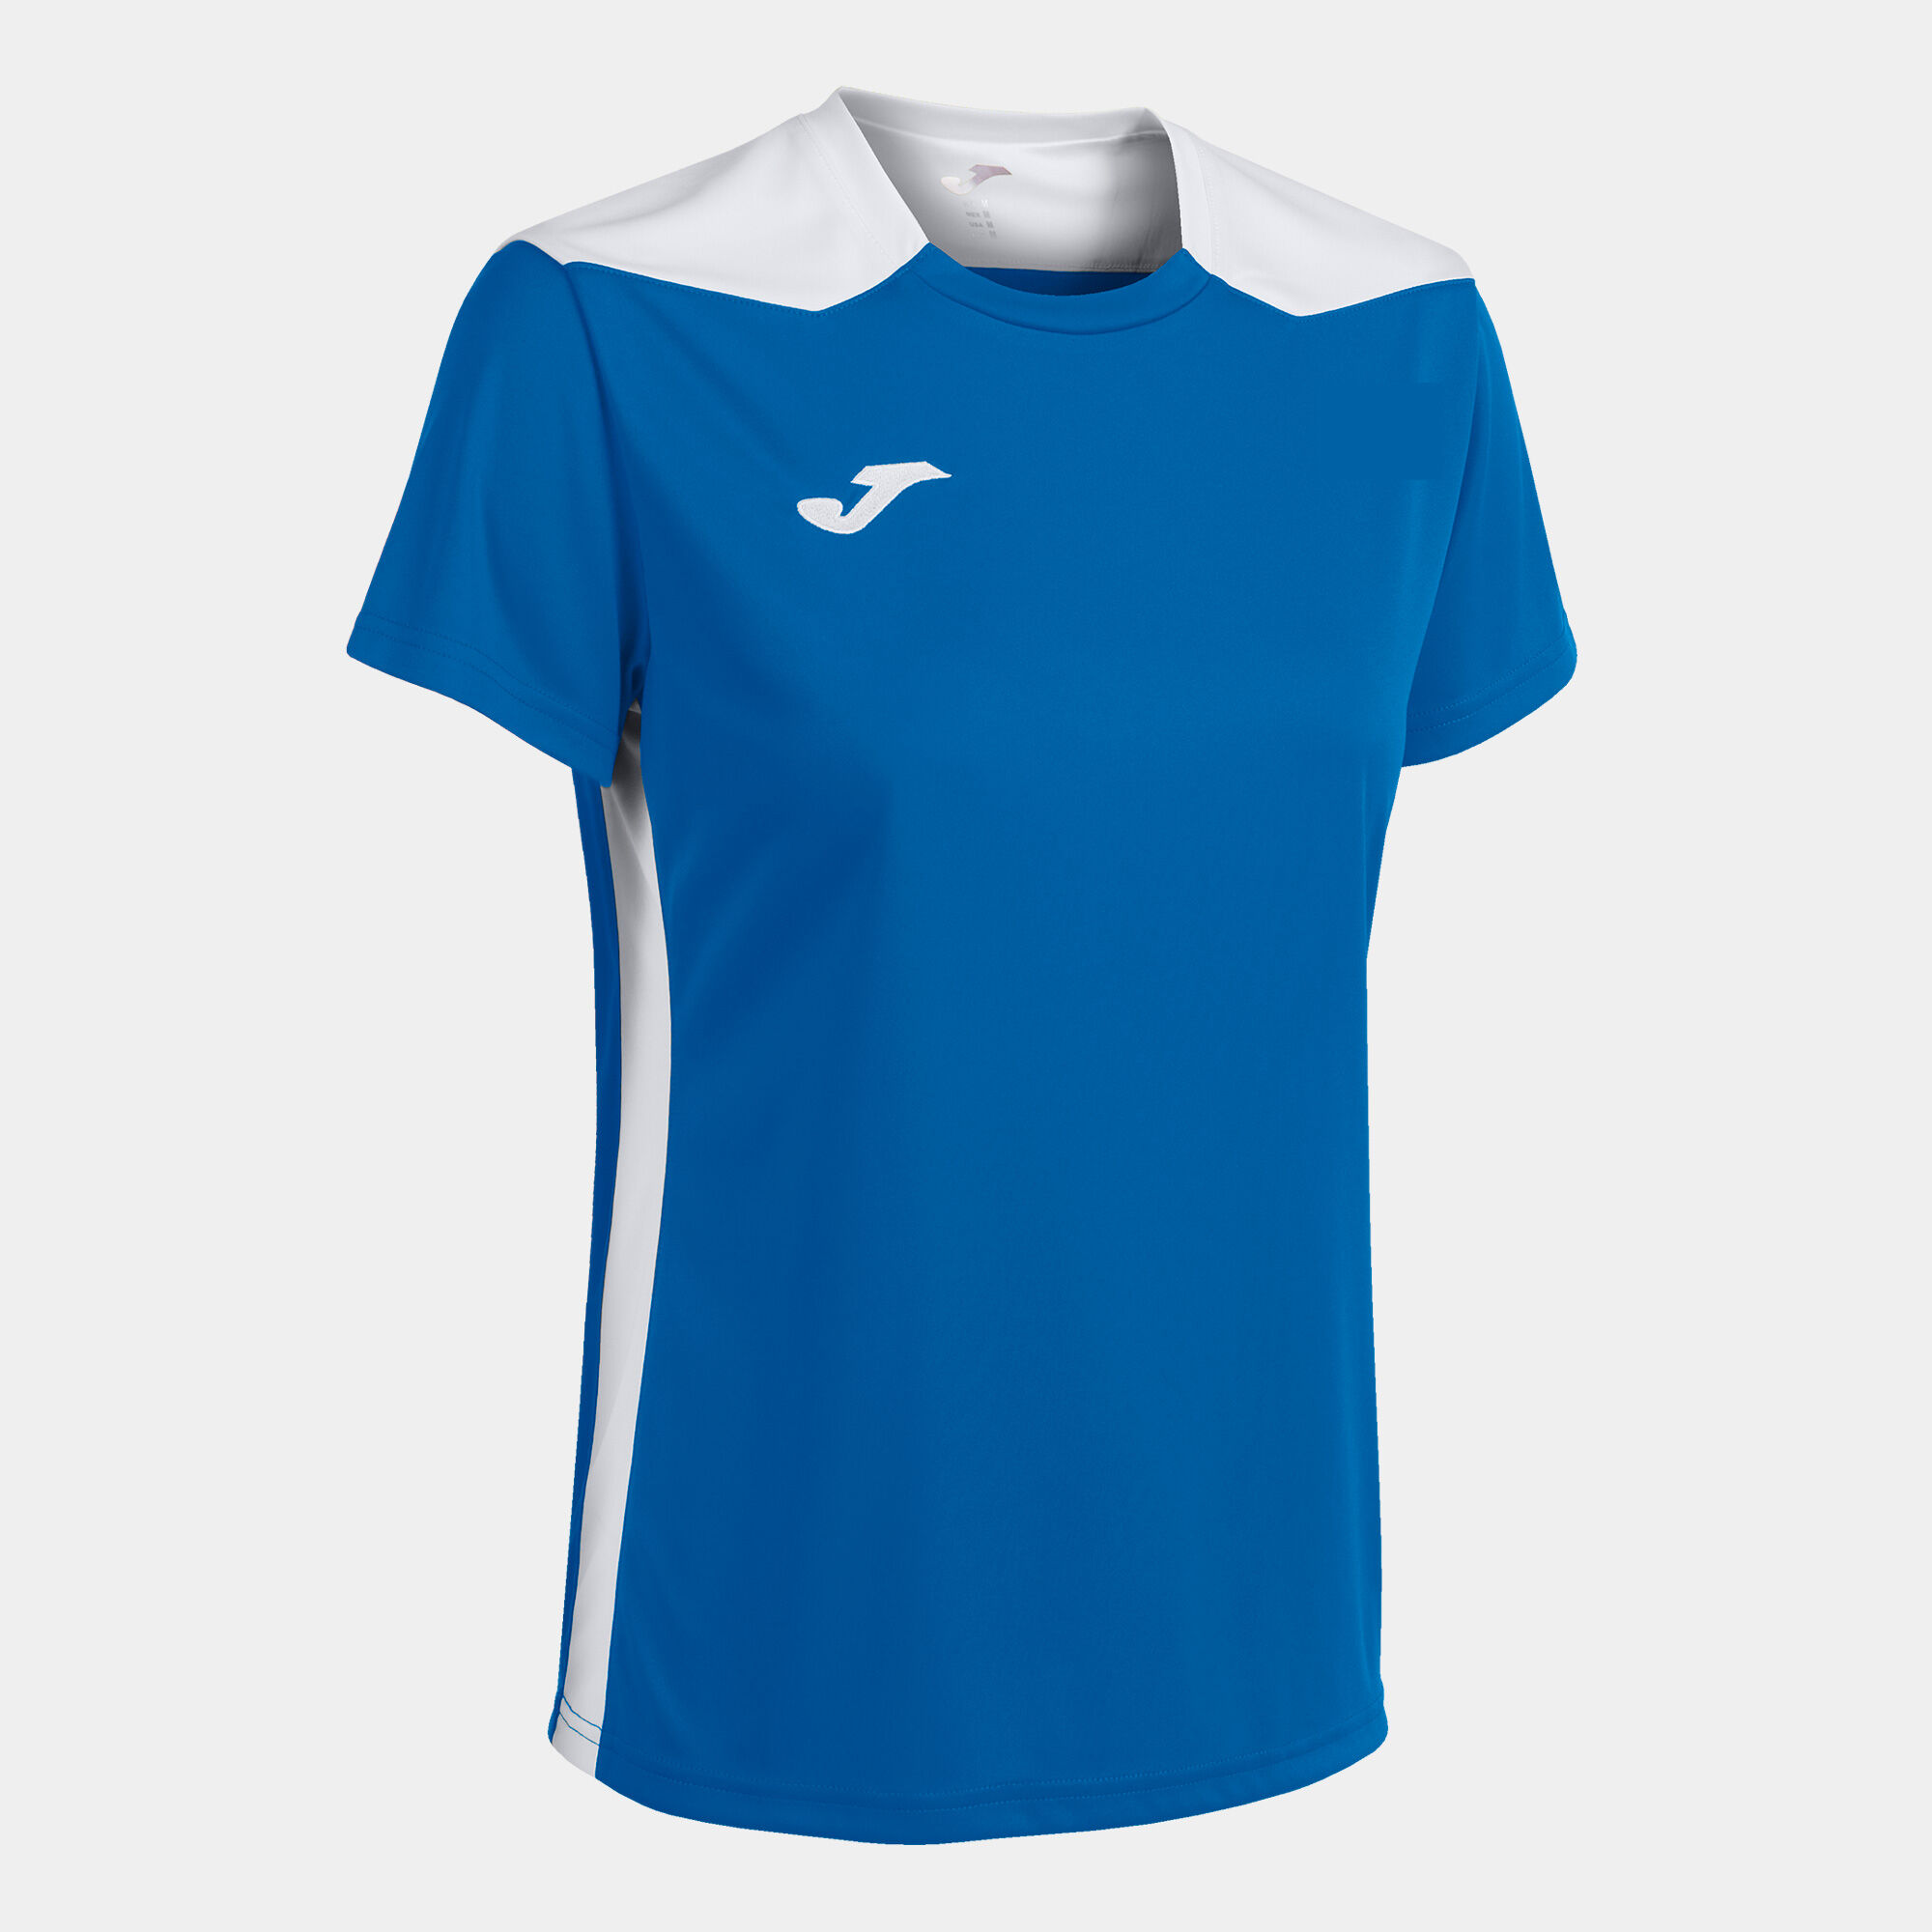 Shirt short sleeve woman Championship VI royal blue white